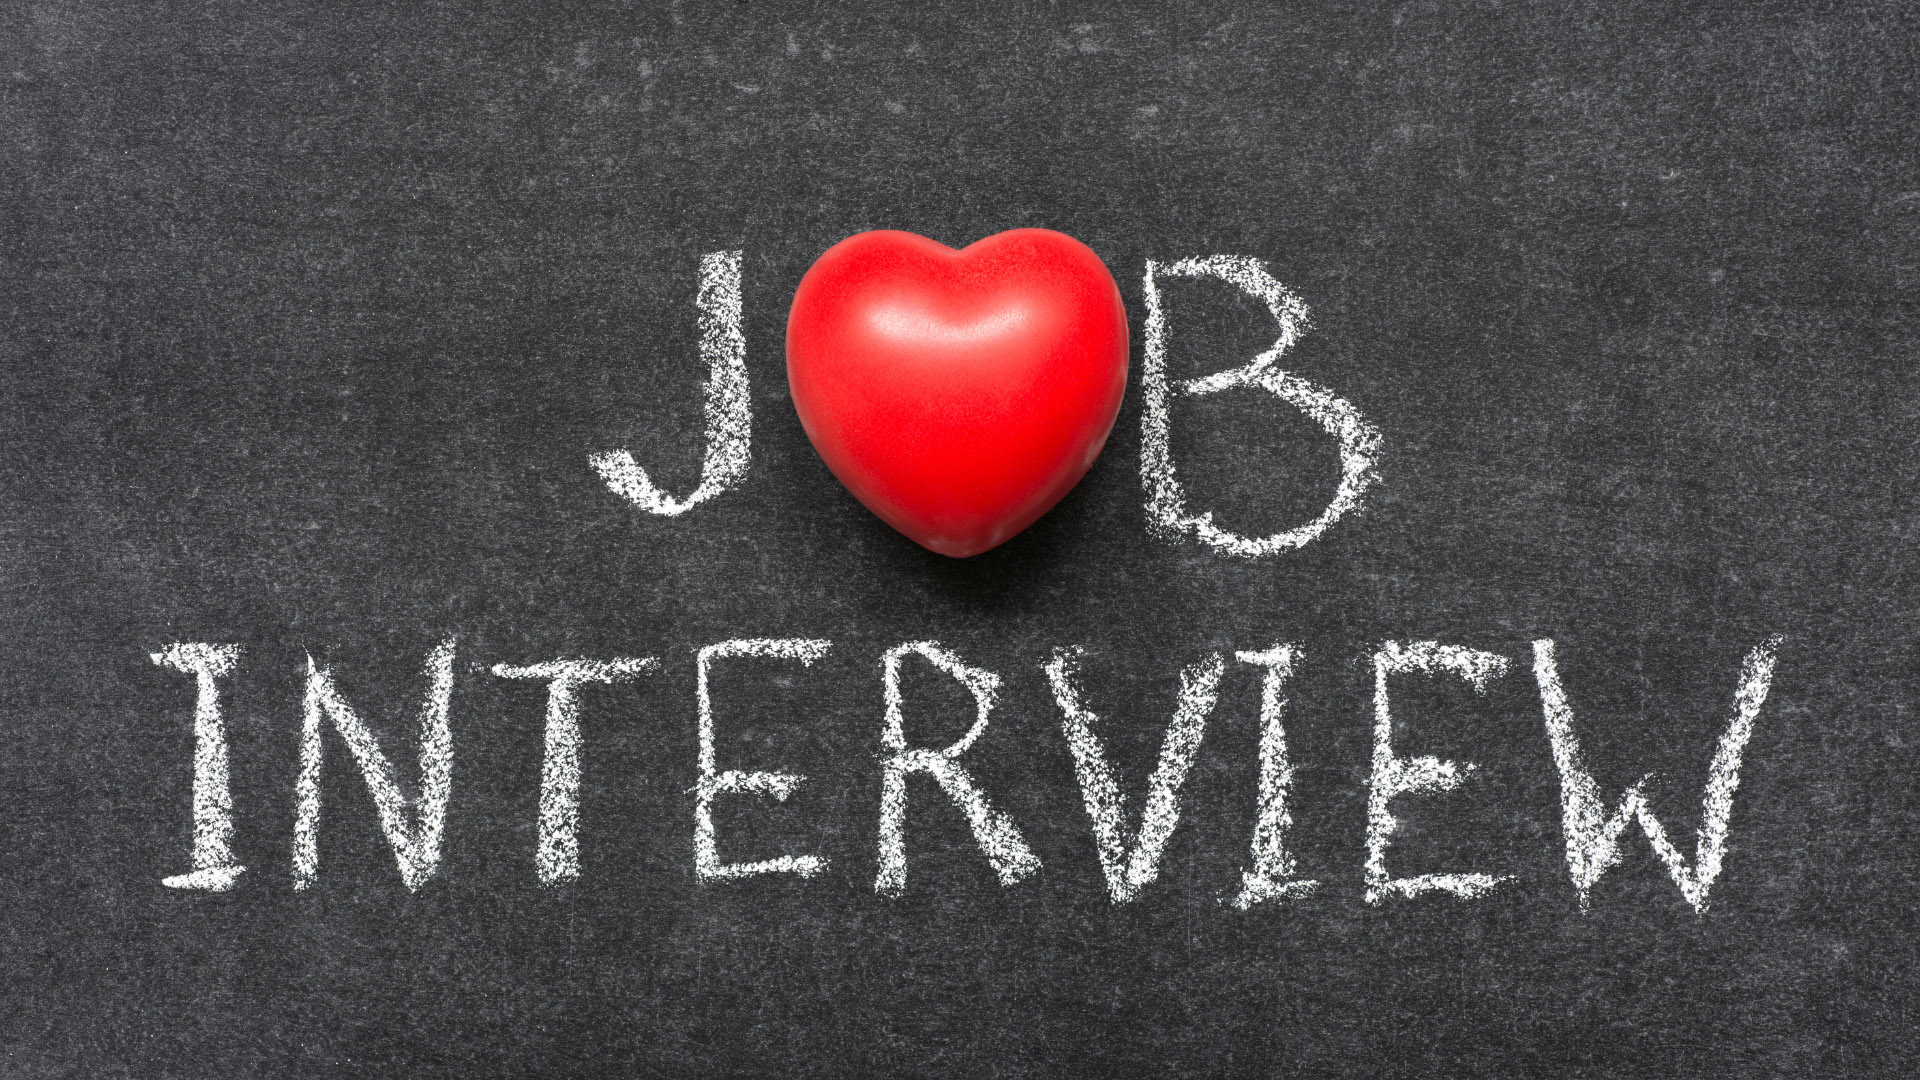 flawed job interview process